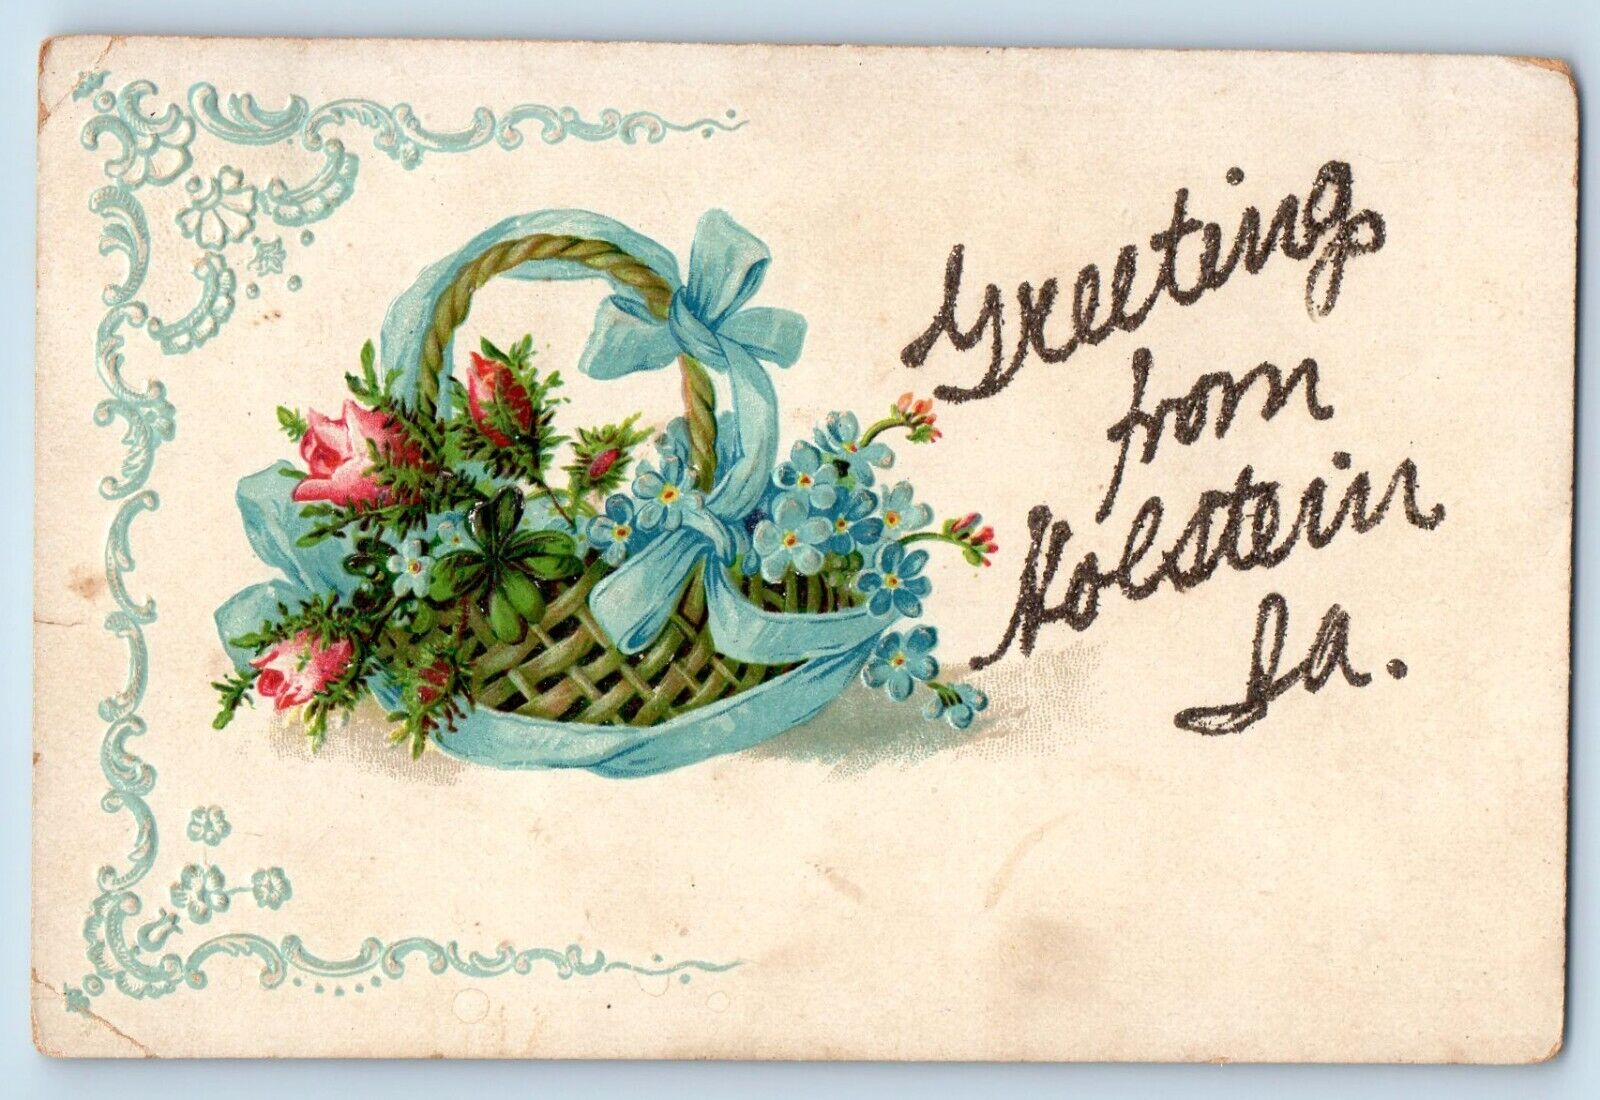 Holstein Iowa IA Postcard Greetings Glitter Embossed Flower 1910 Vintage Antique